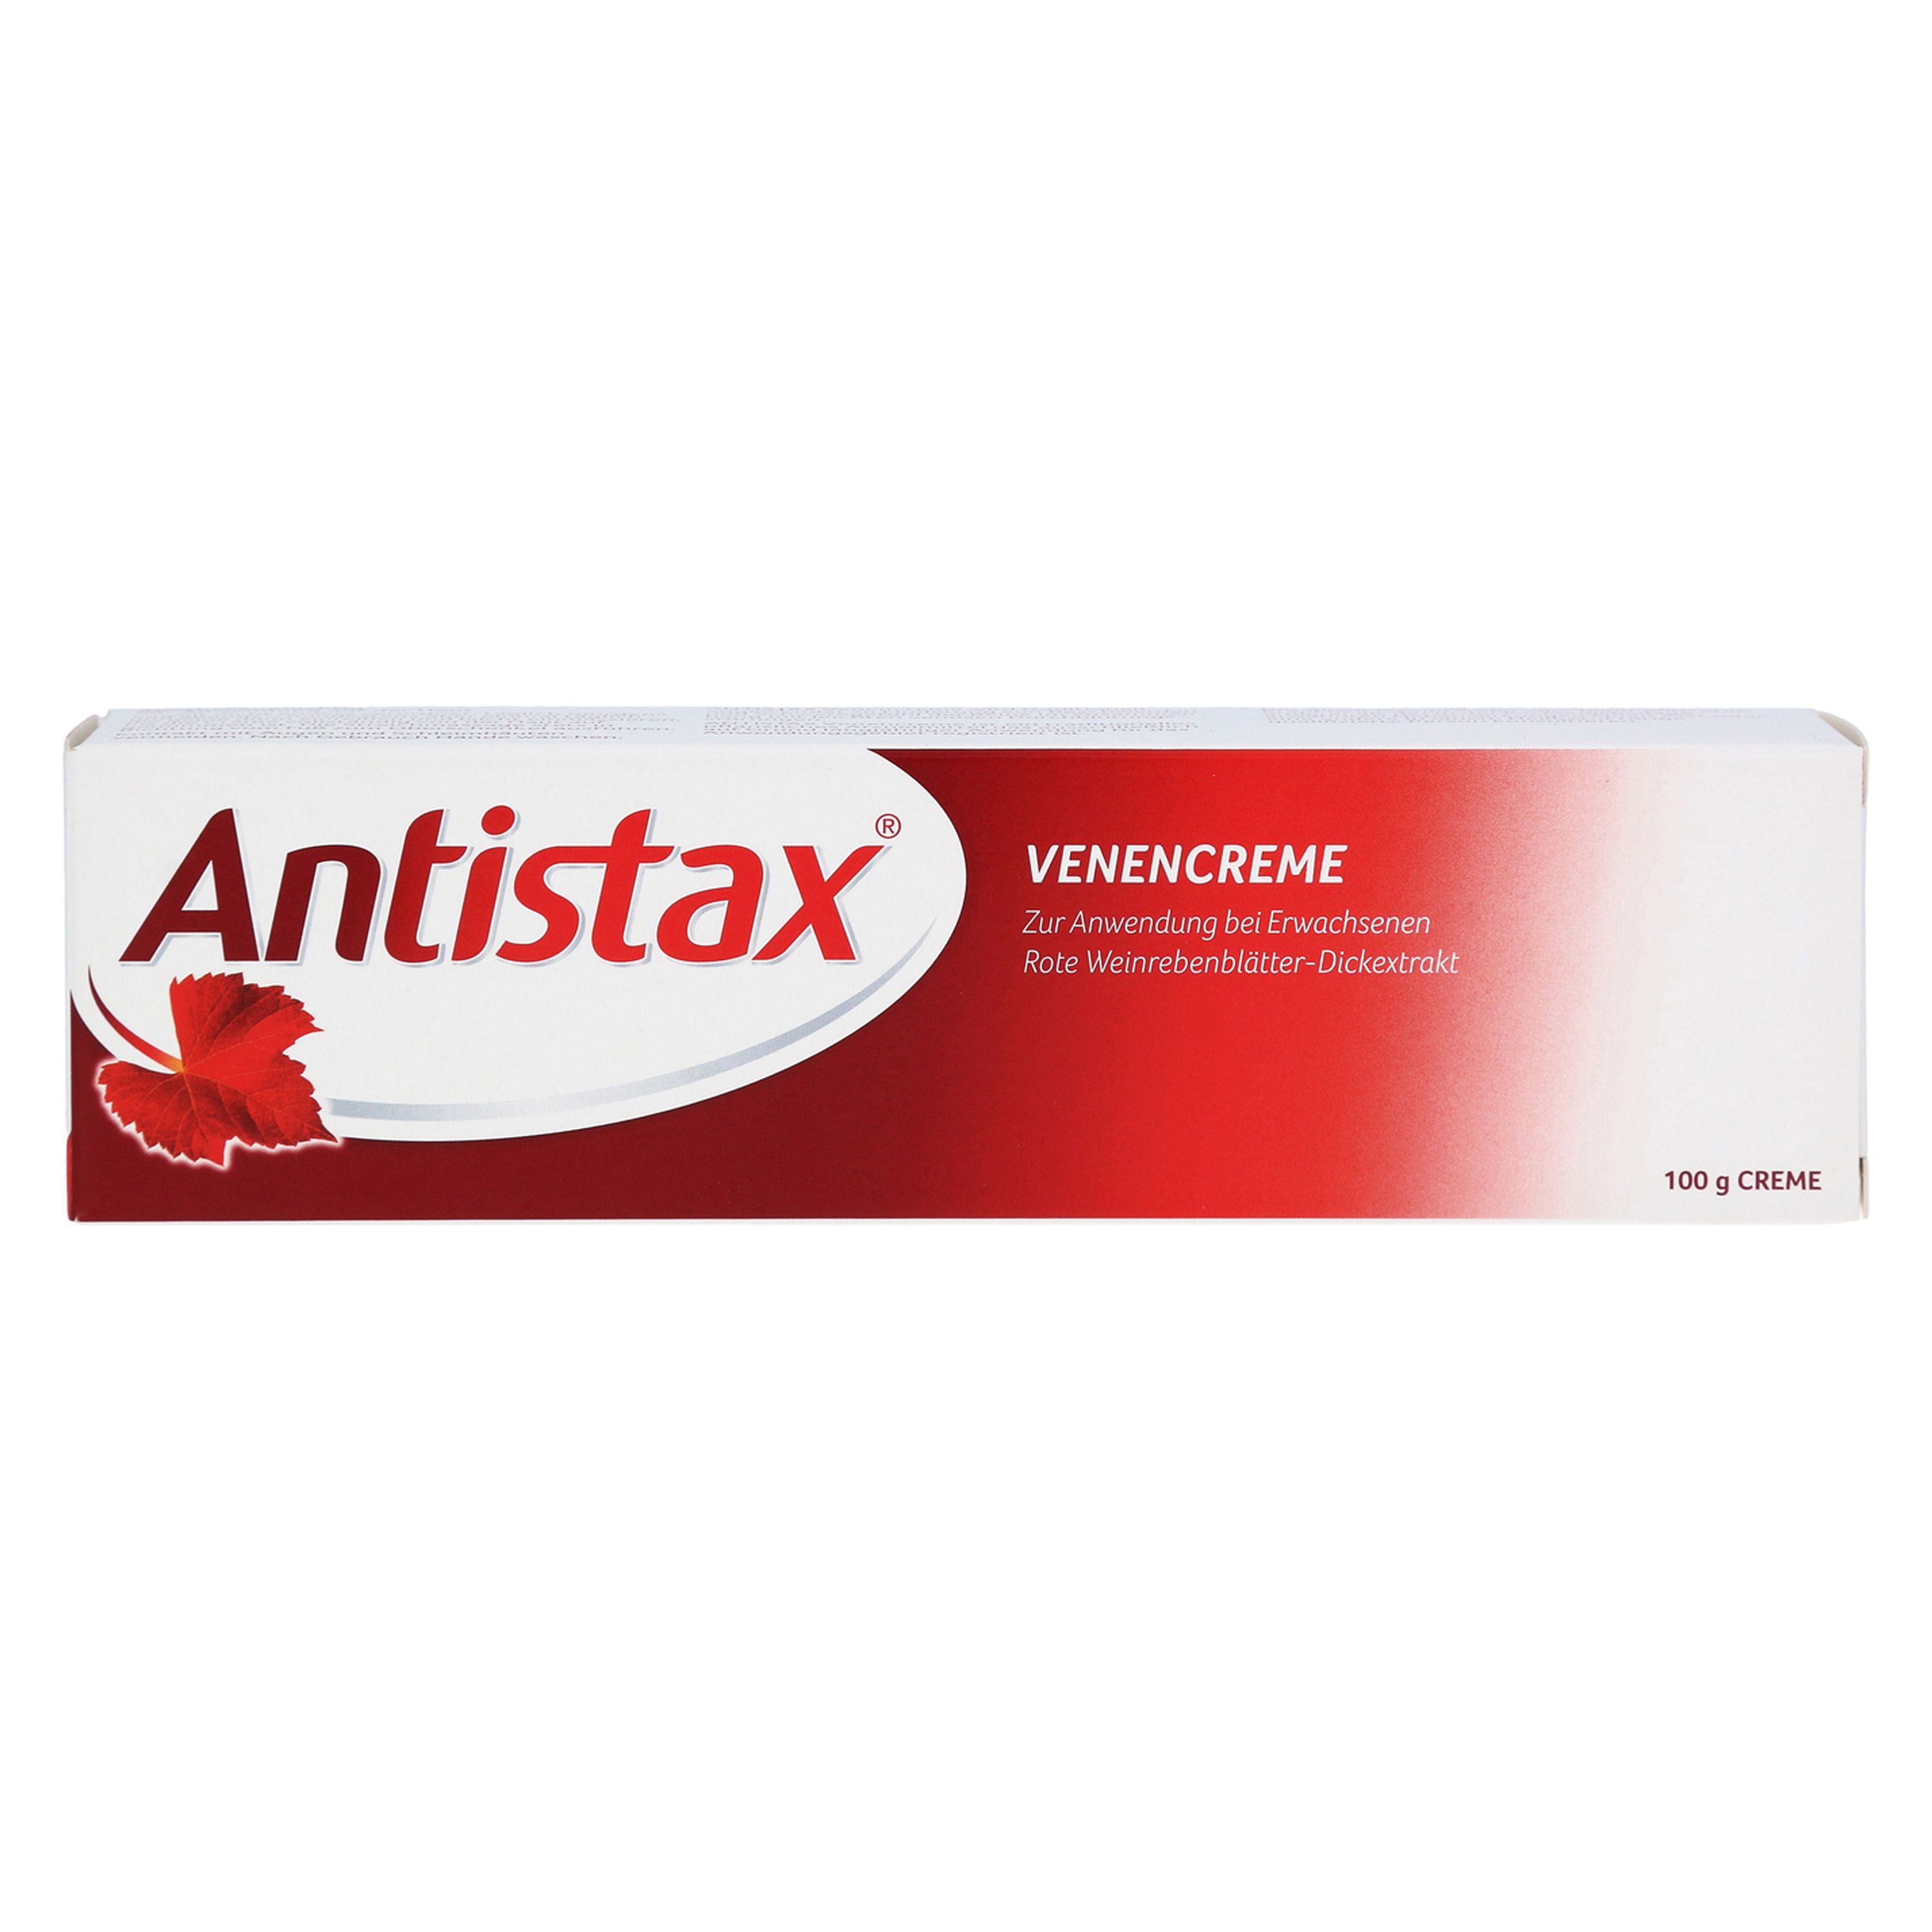 Antistax® Venencreme